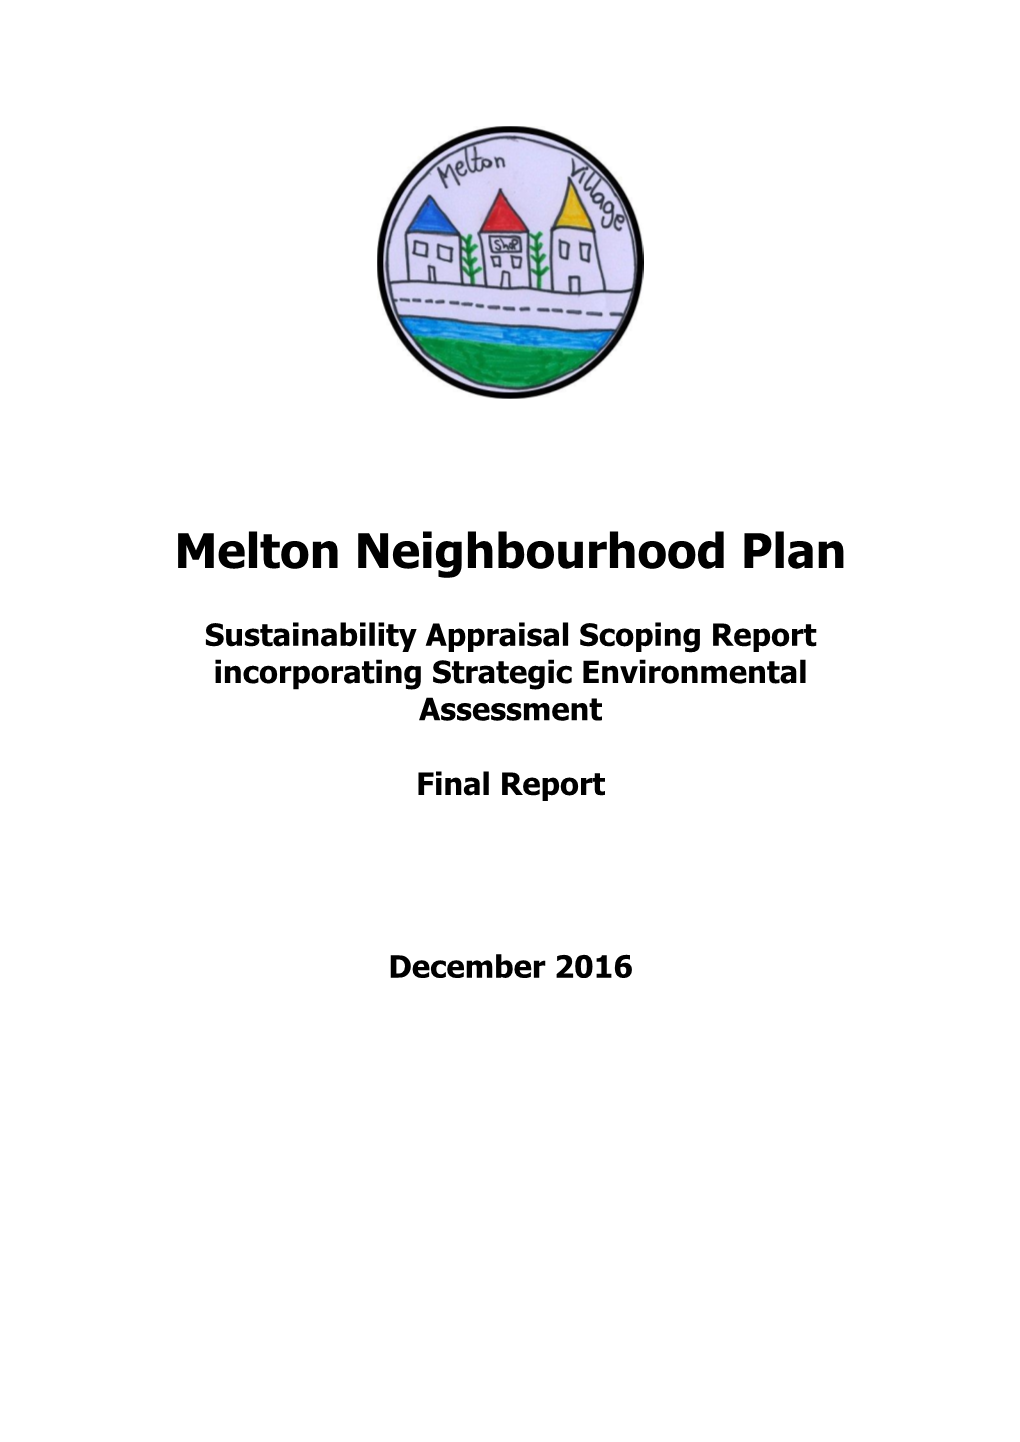 Melton NP Sustainability Appraisal Final